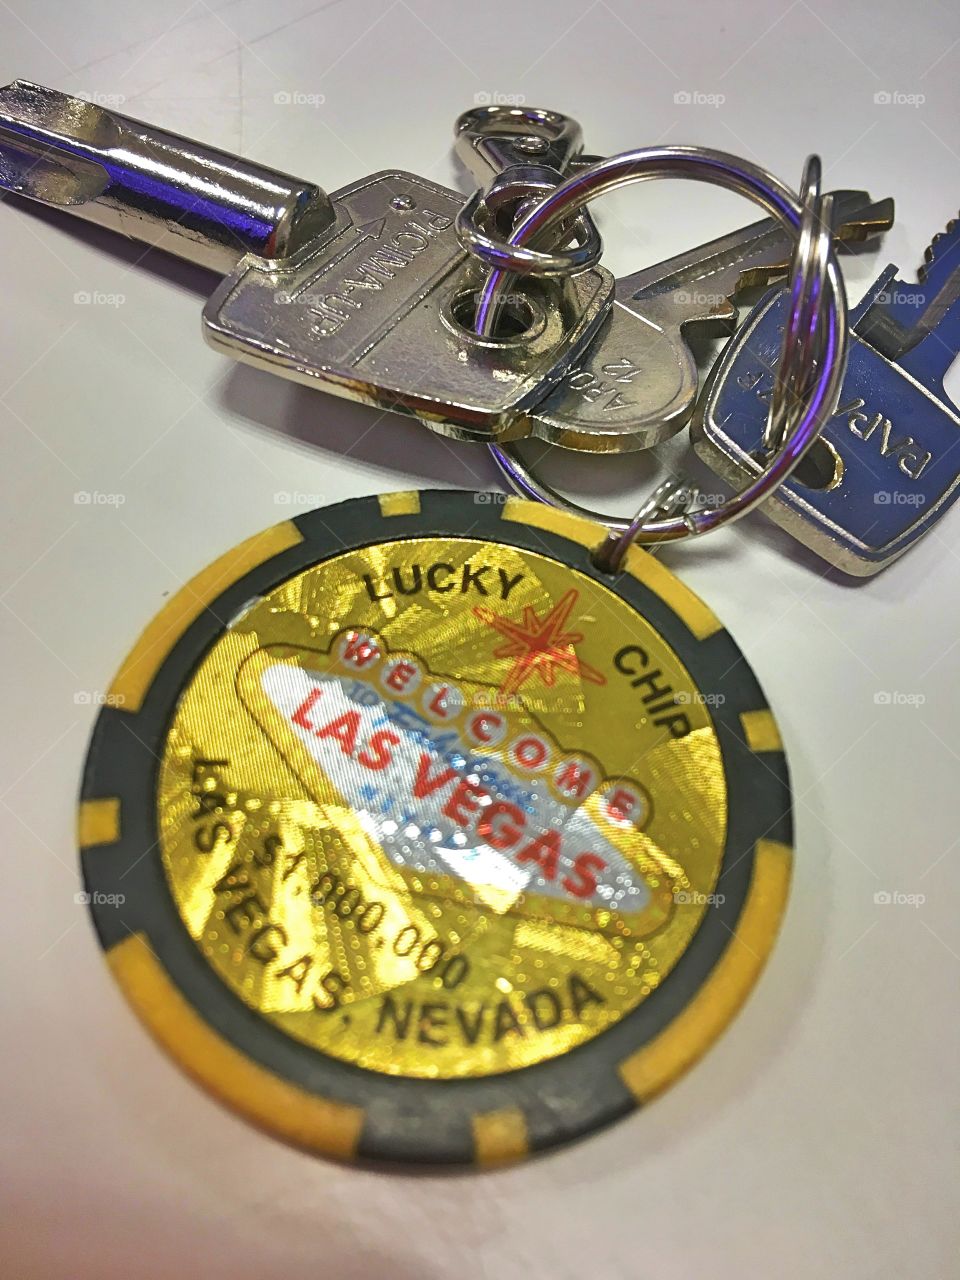 Luck keys 